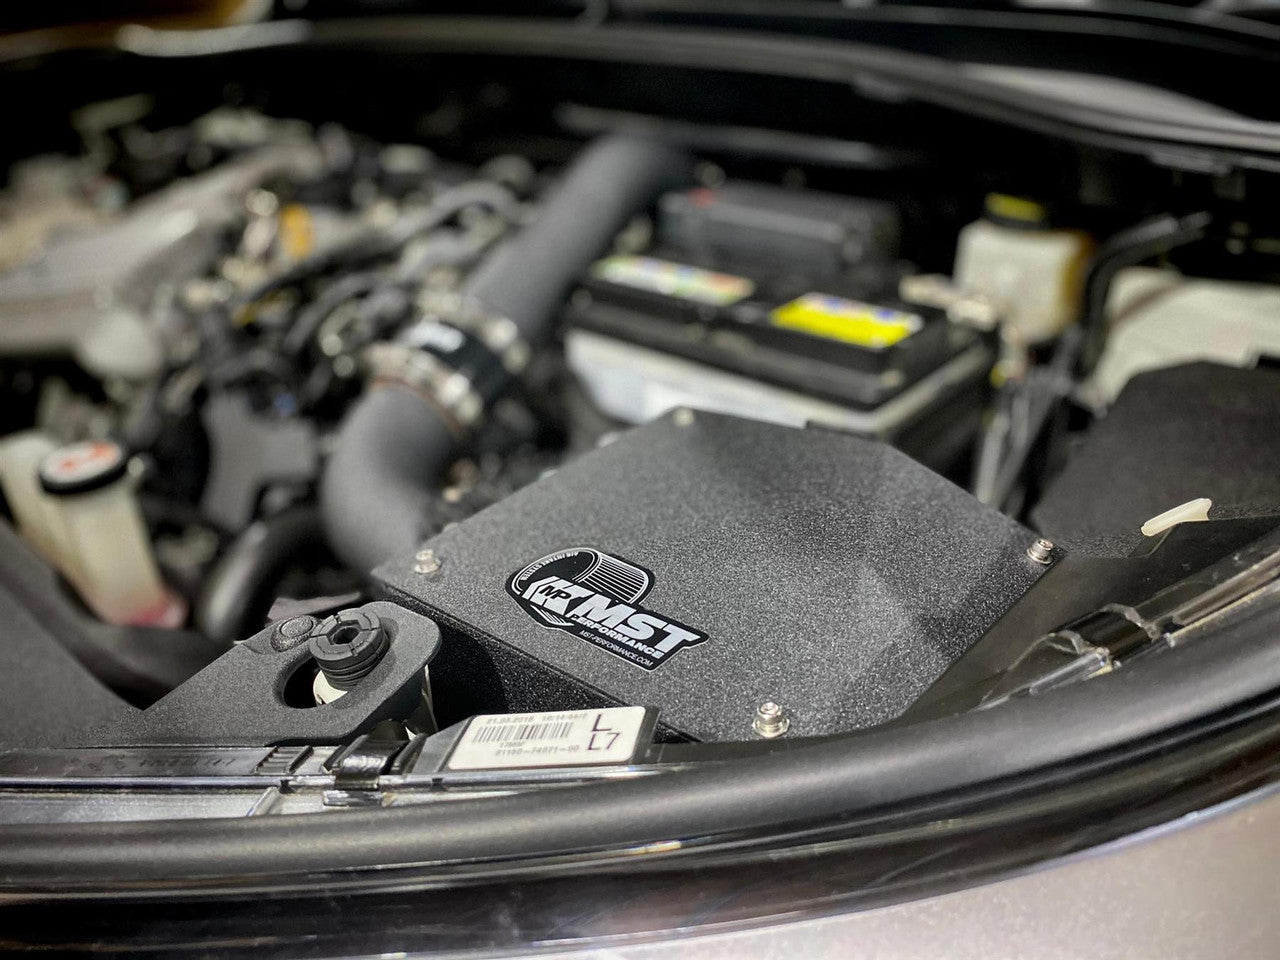 MST Performance Intake System - Toyota C-HR (17-20)